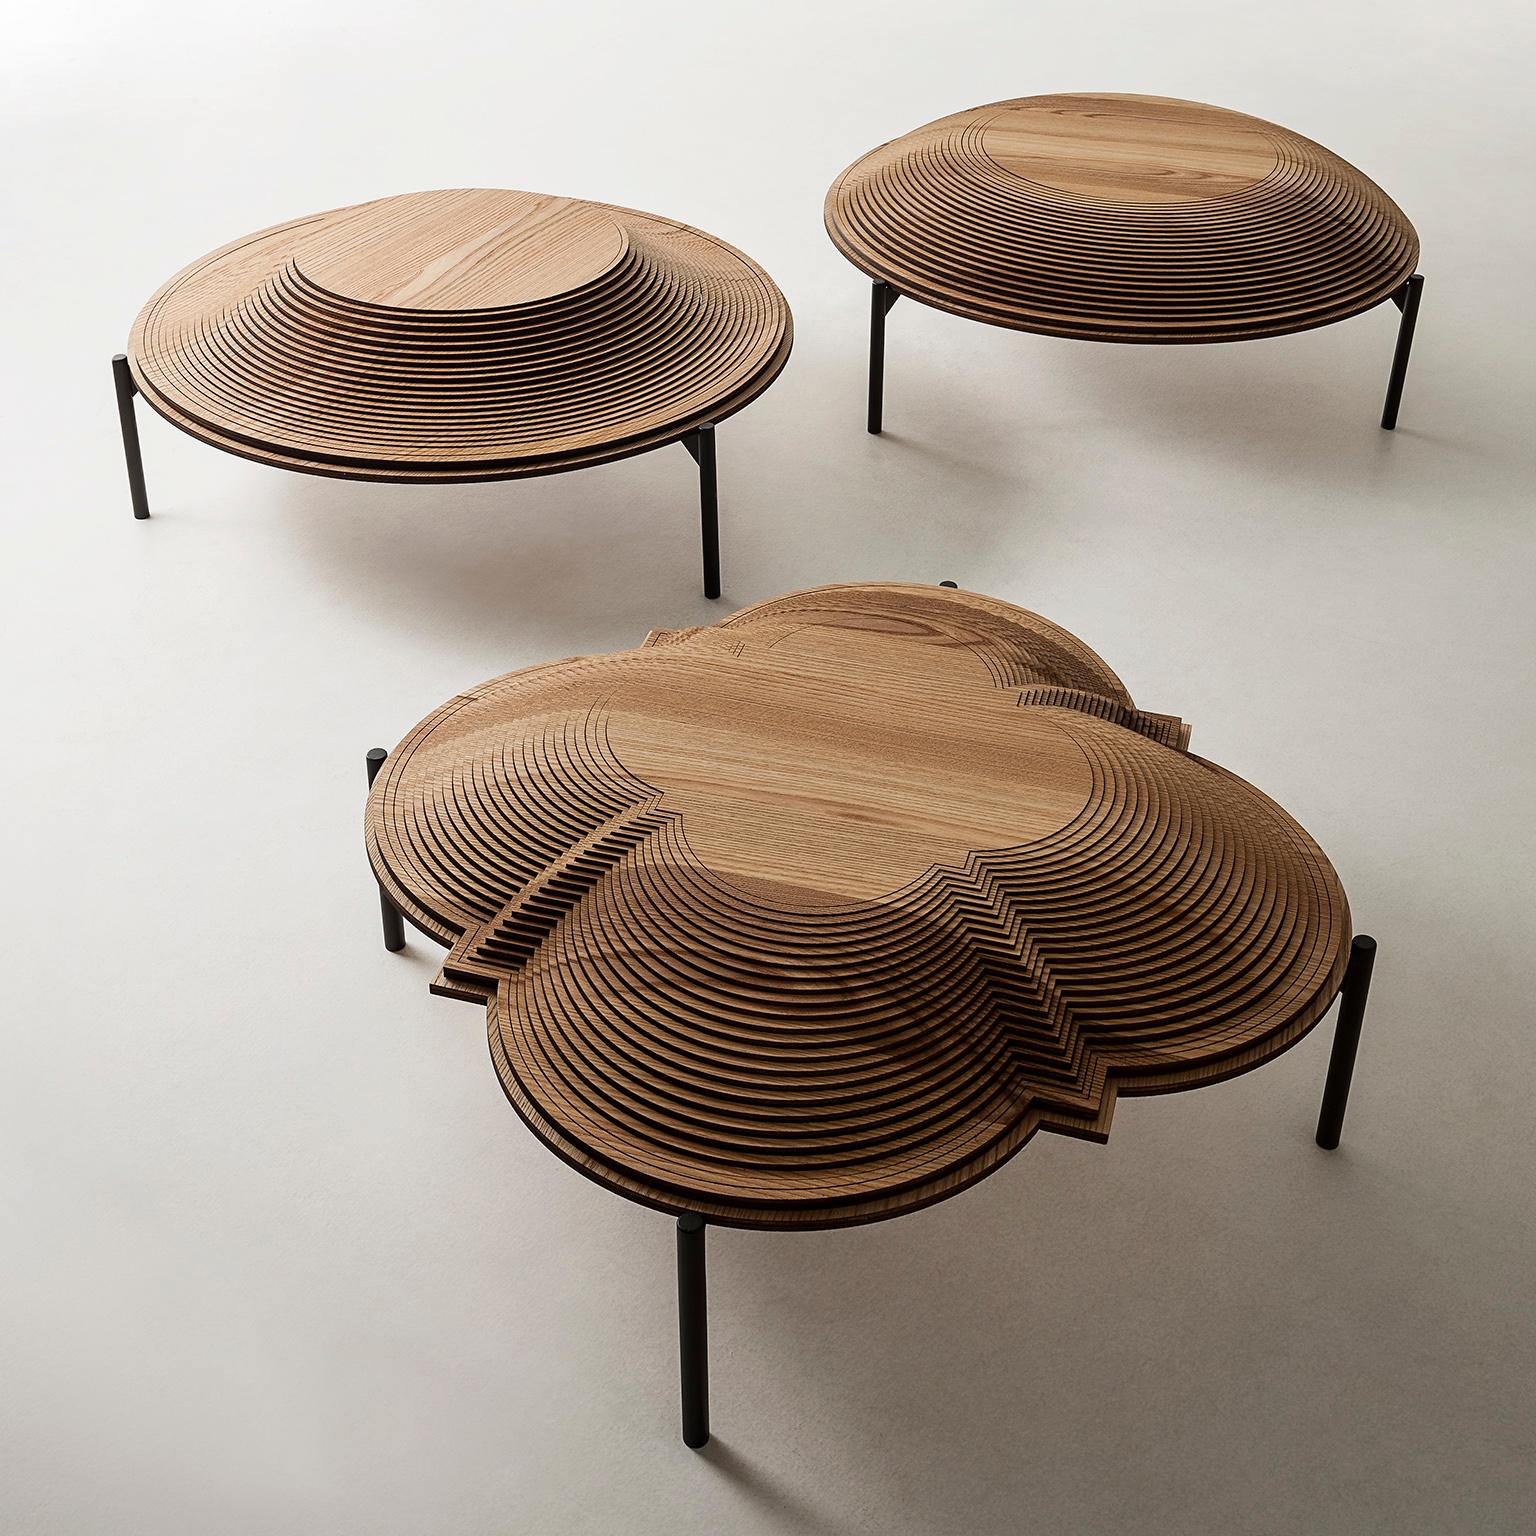 Bois Table basse moderne sculpturale en bois « Dome 2 and 3 » de Sebastiano Bottos, Italie en vente